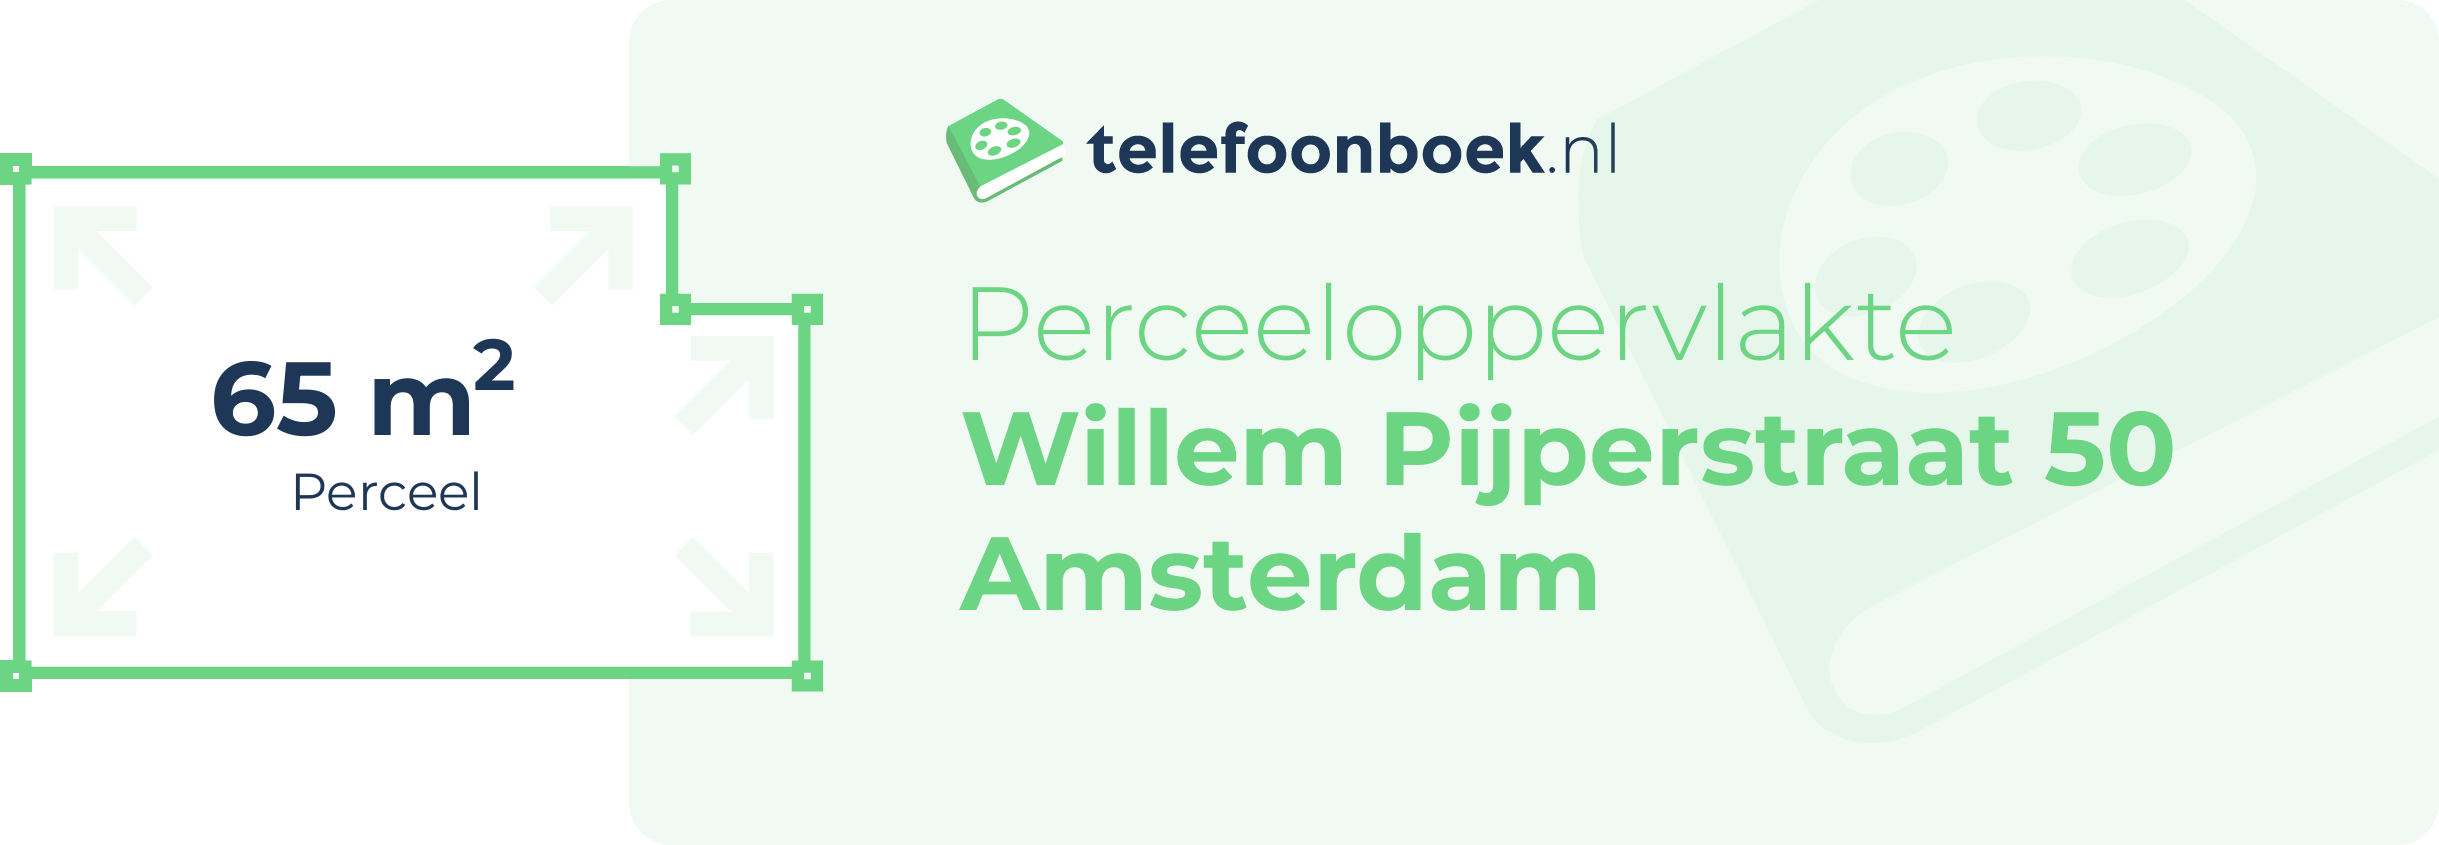 Perceeloppervlakte Willem Pijperstraat 50 Amsterdam